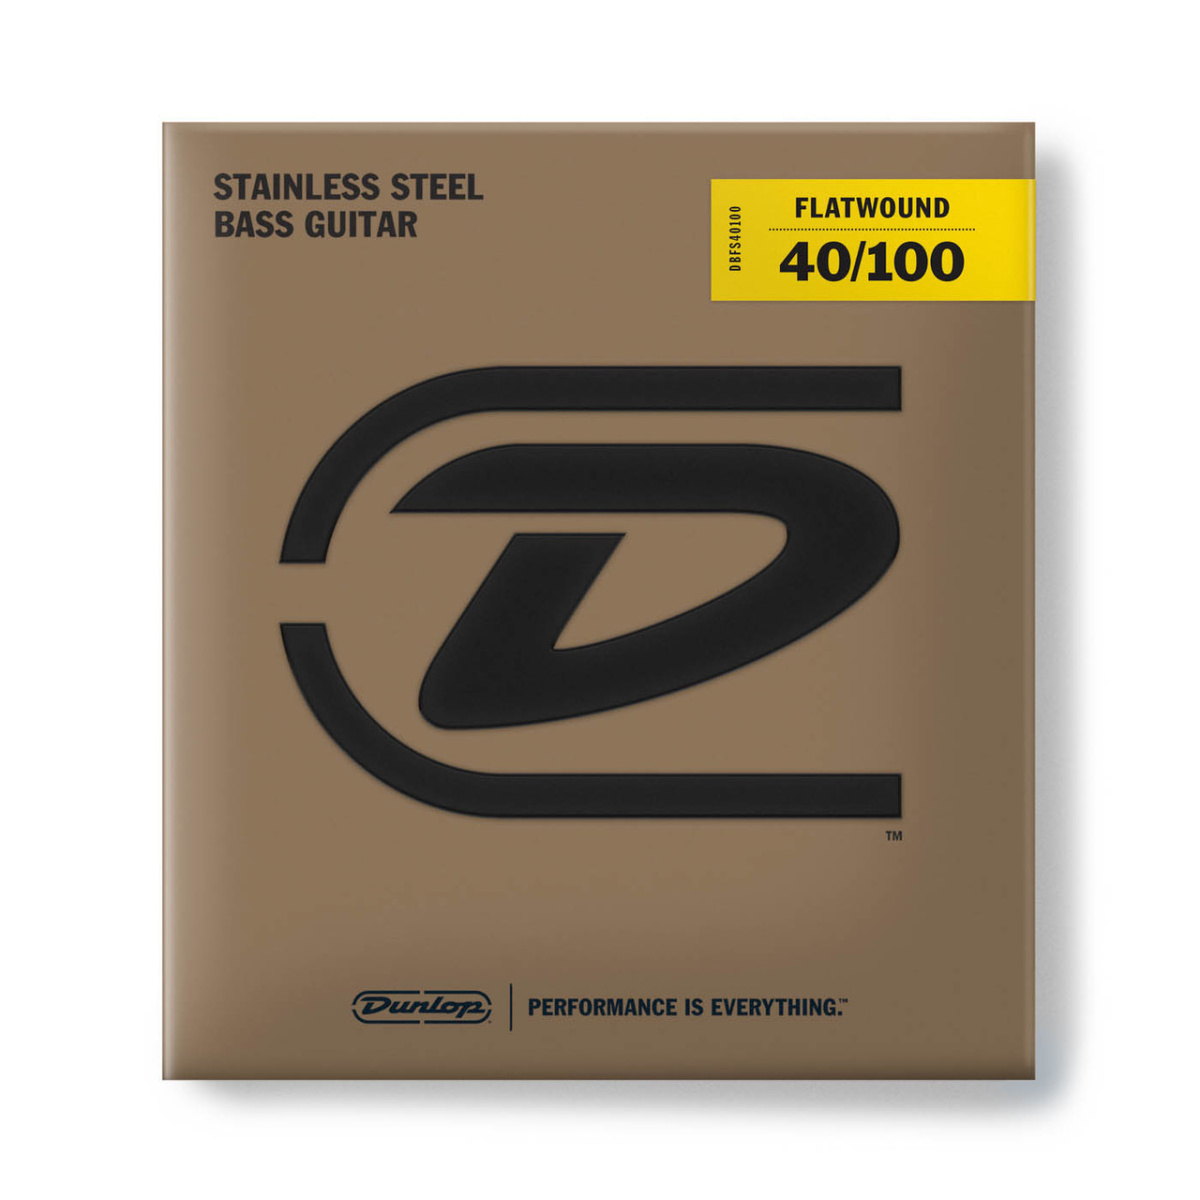 Dunlop DBFS40100M Flatwound Medium Scale Комплект струн для бас-гитары, сталь, 40-100. купить в prostore.me